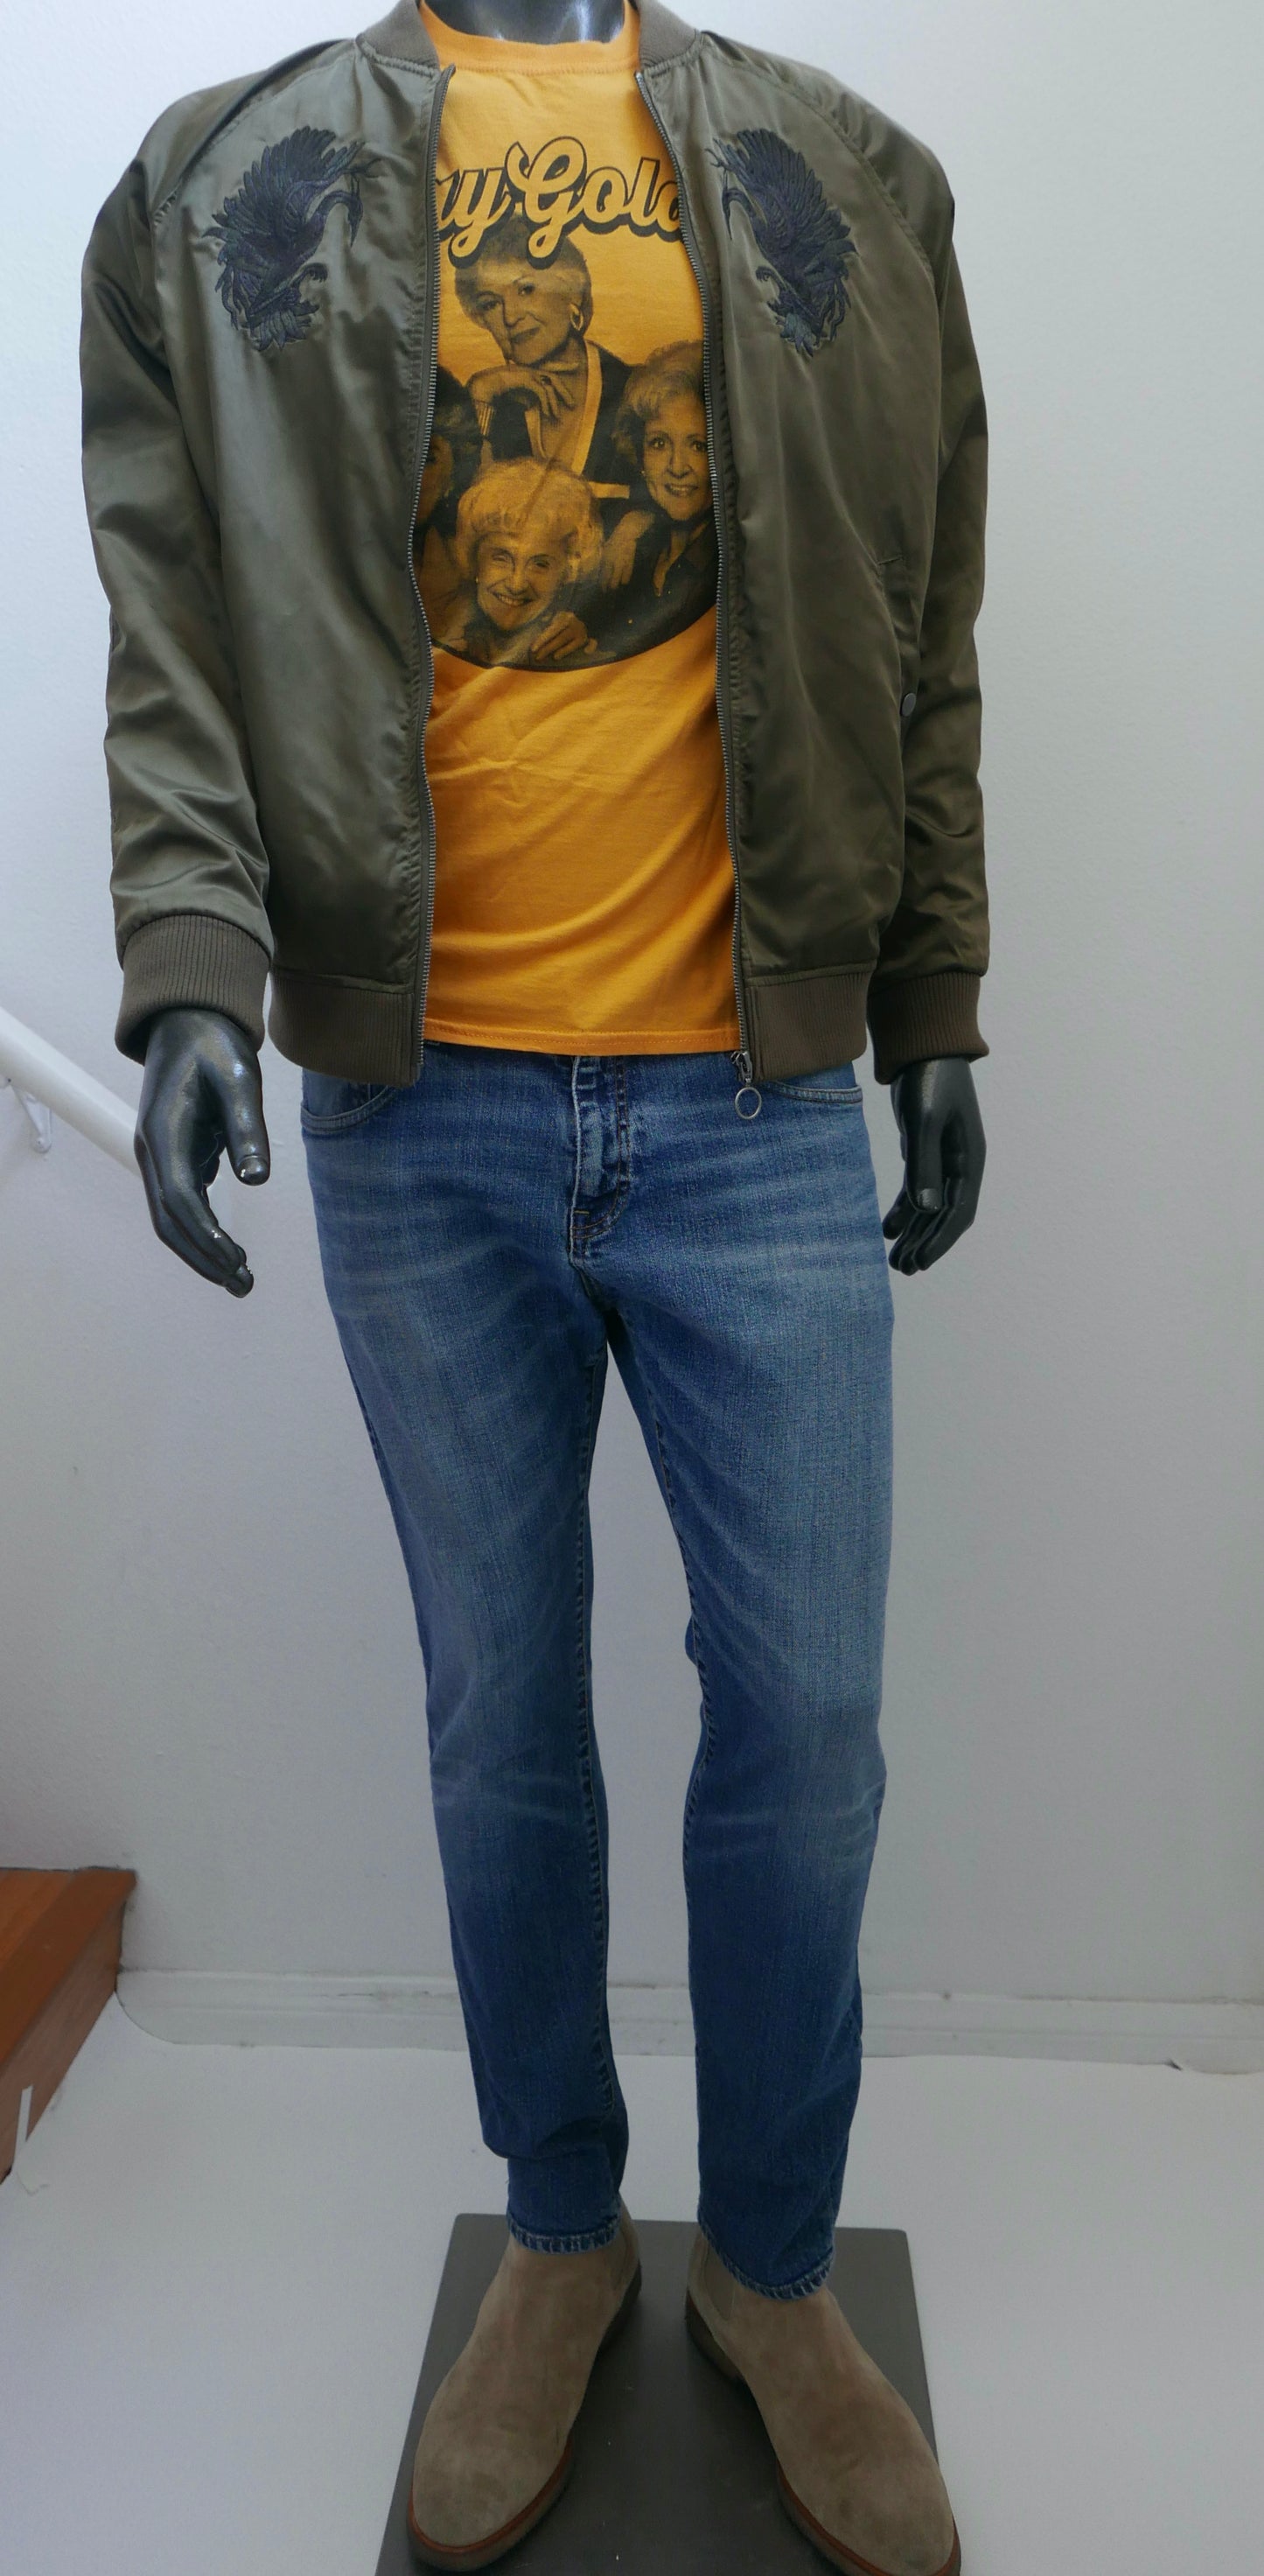 Armani Exchange Blue Jeans, Size 38